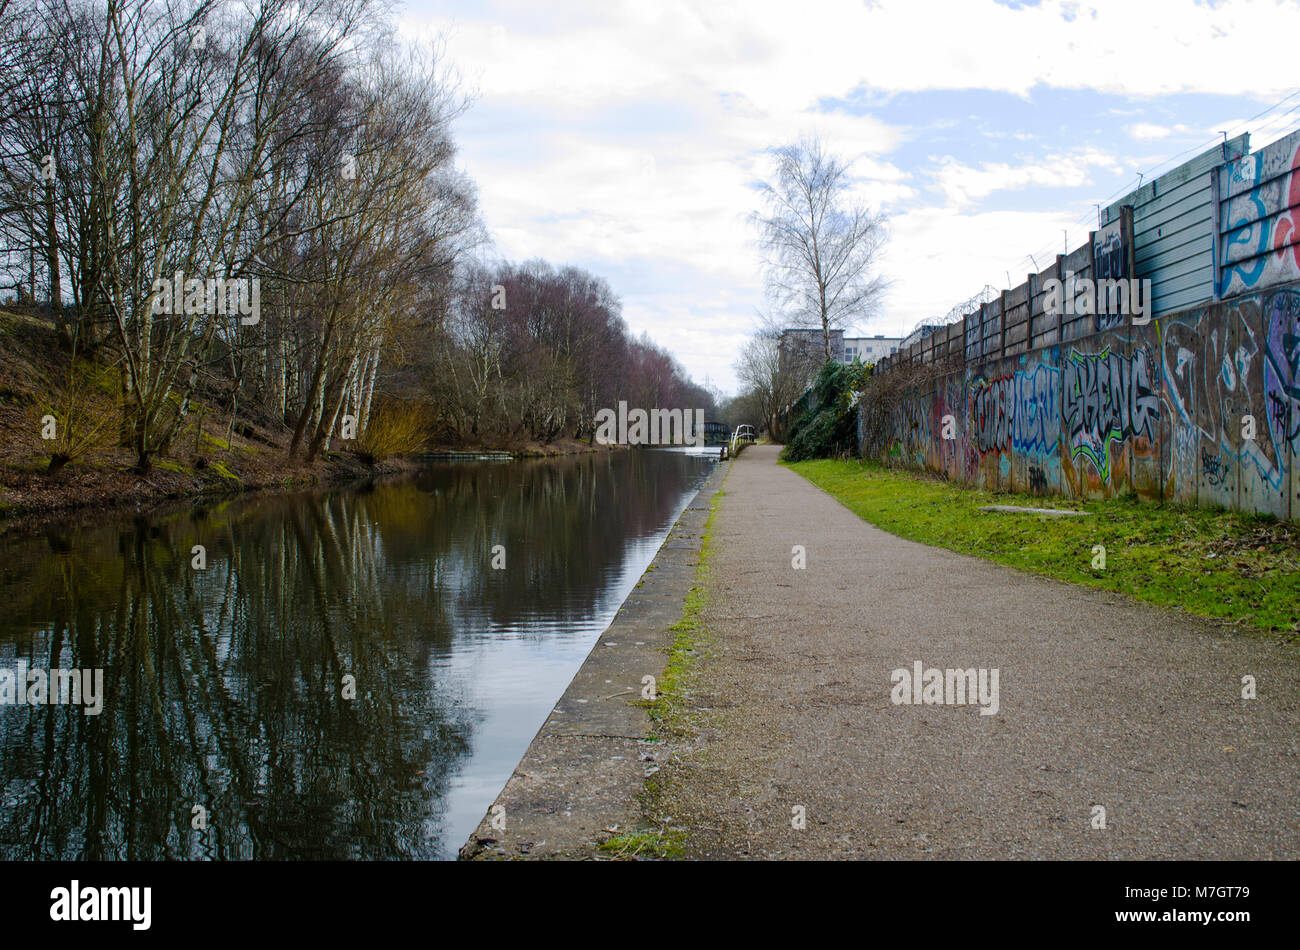 tow path on Birmingham canal Stock Photo